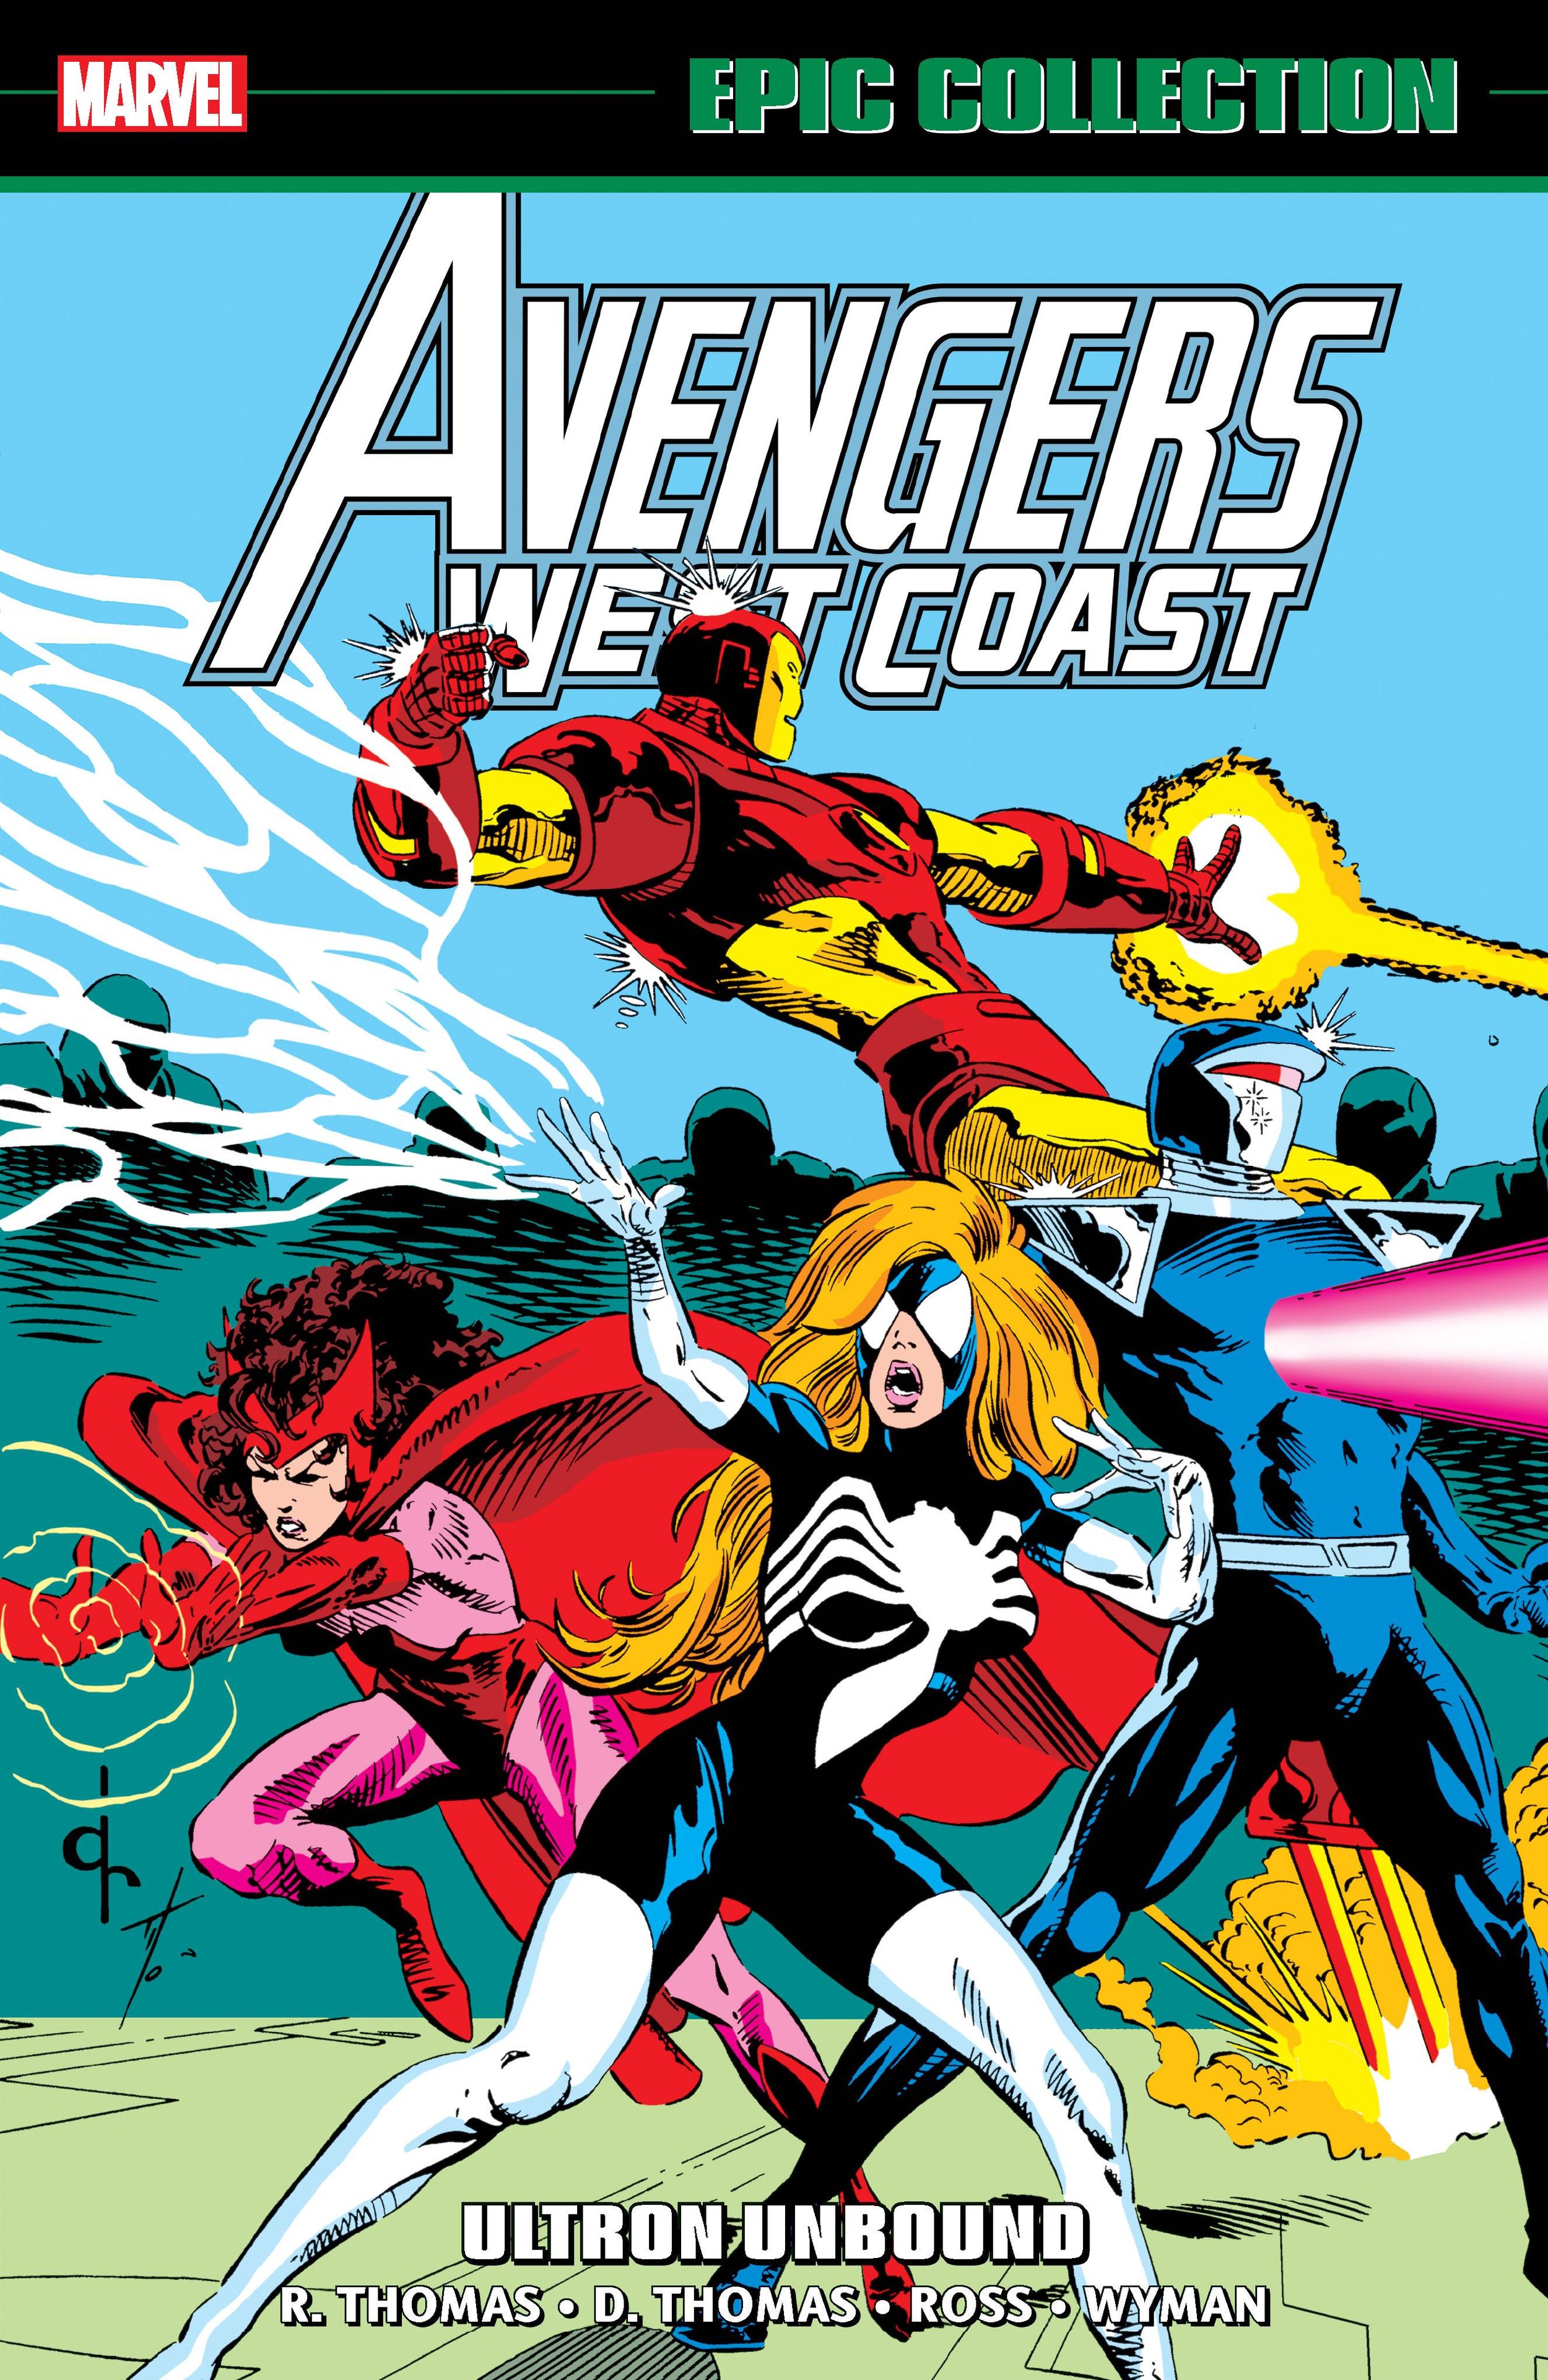 Jan 24 Avengers West Coast Ultron Unbound.jpg